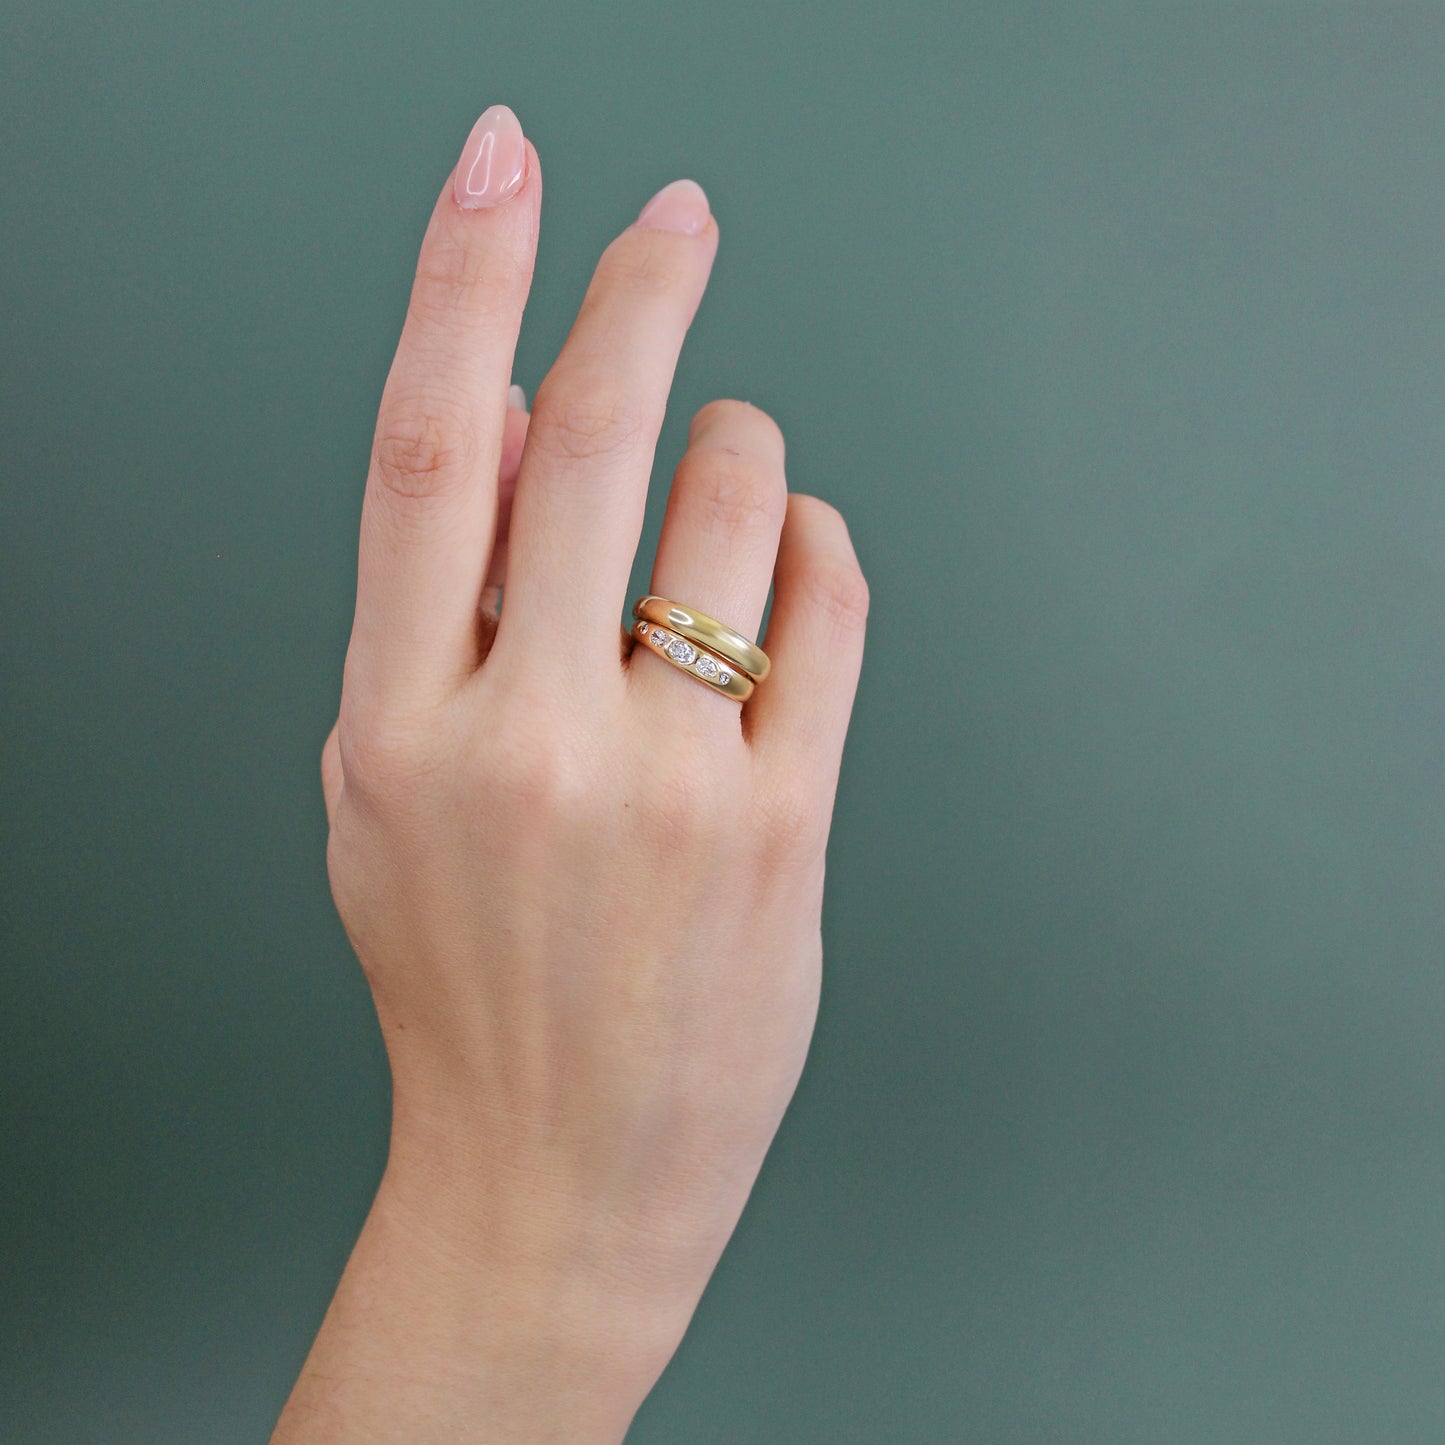 Model wearing Ellipse Band / Medium with Ellipse Diamond engagement ring on ring finger